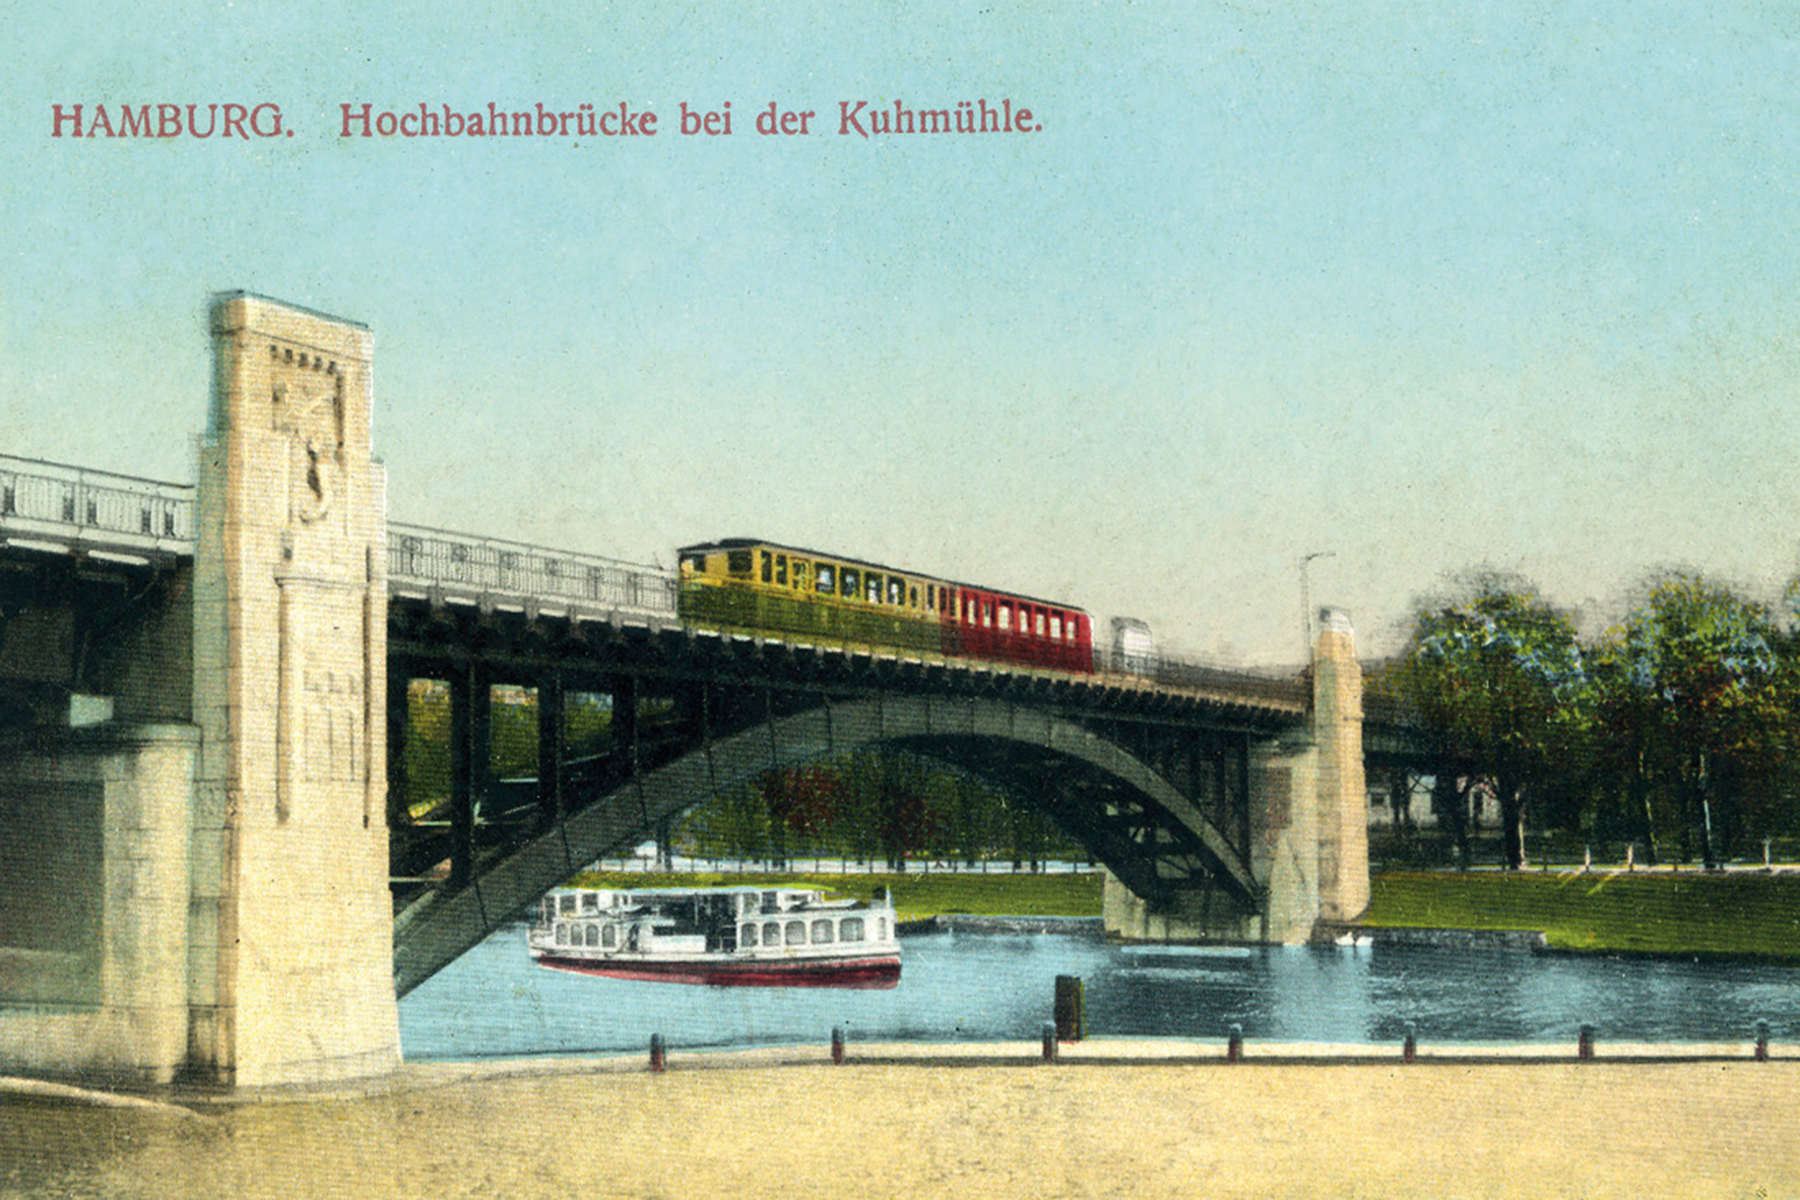 Geheimtipp Hamburg Hochbahnbrücke Kuhmühle 2